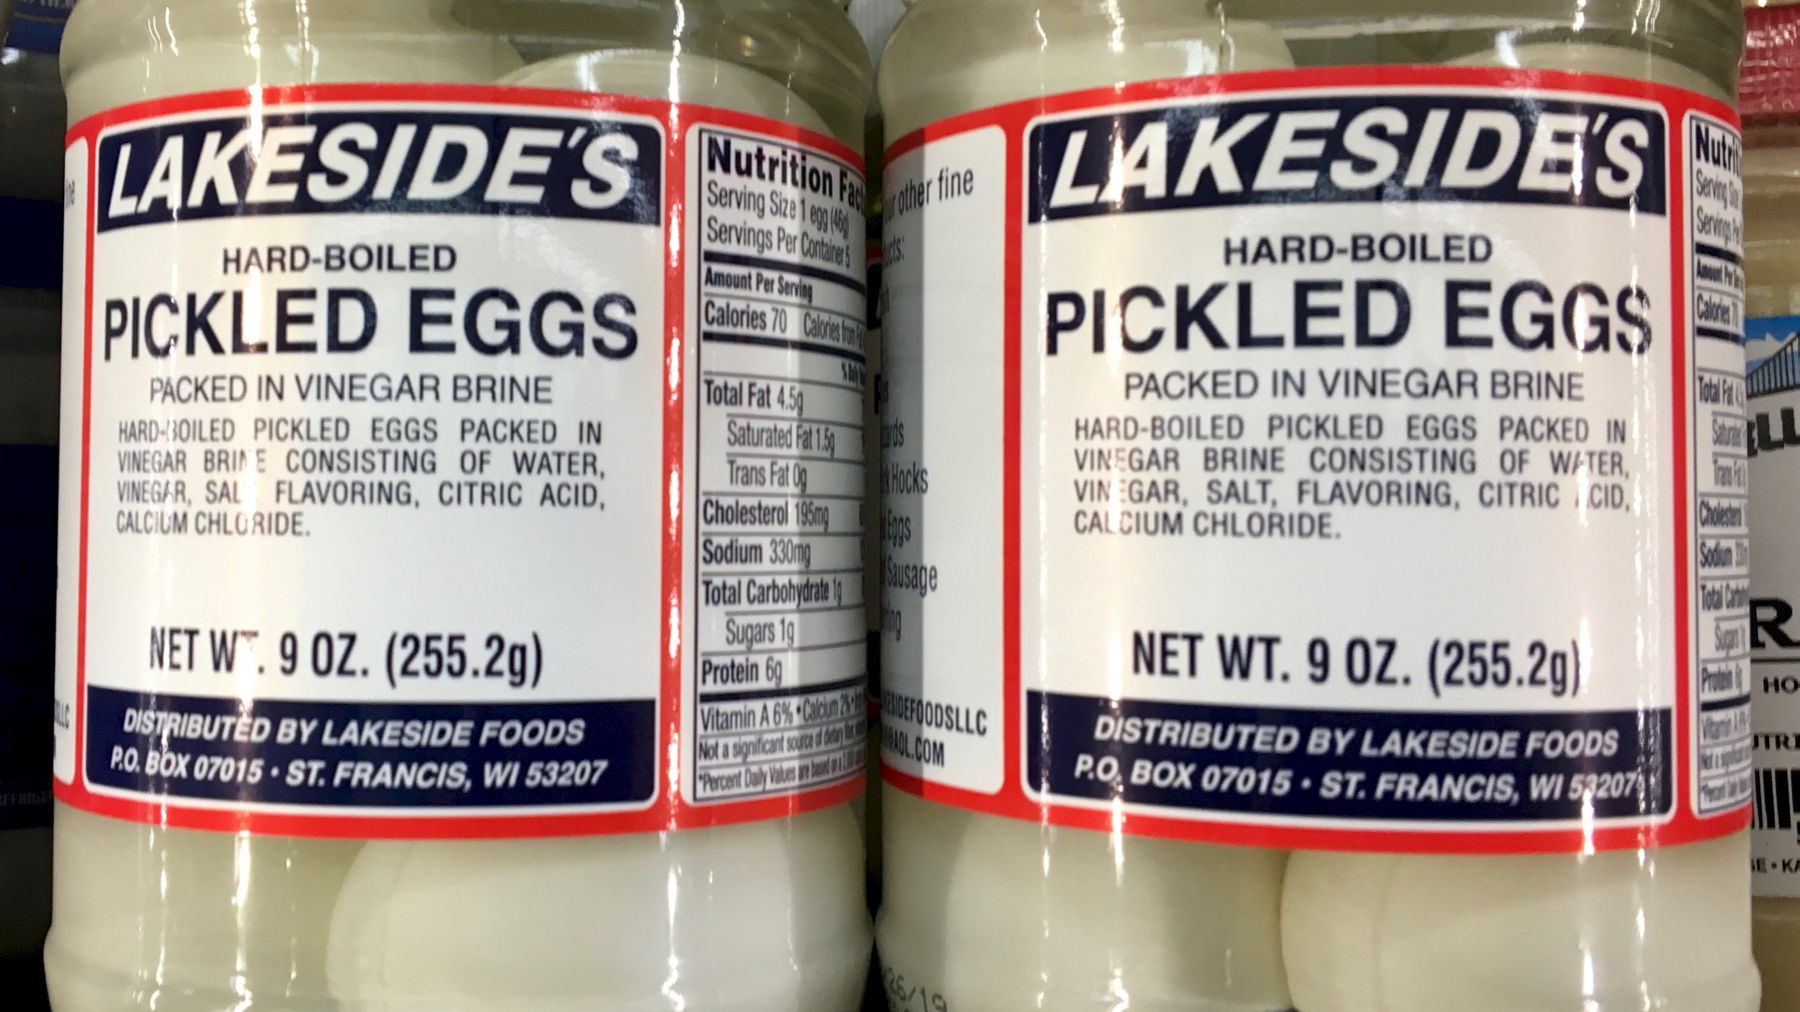 Pickled eggs